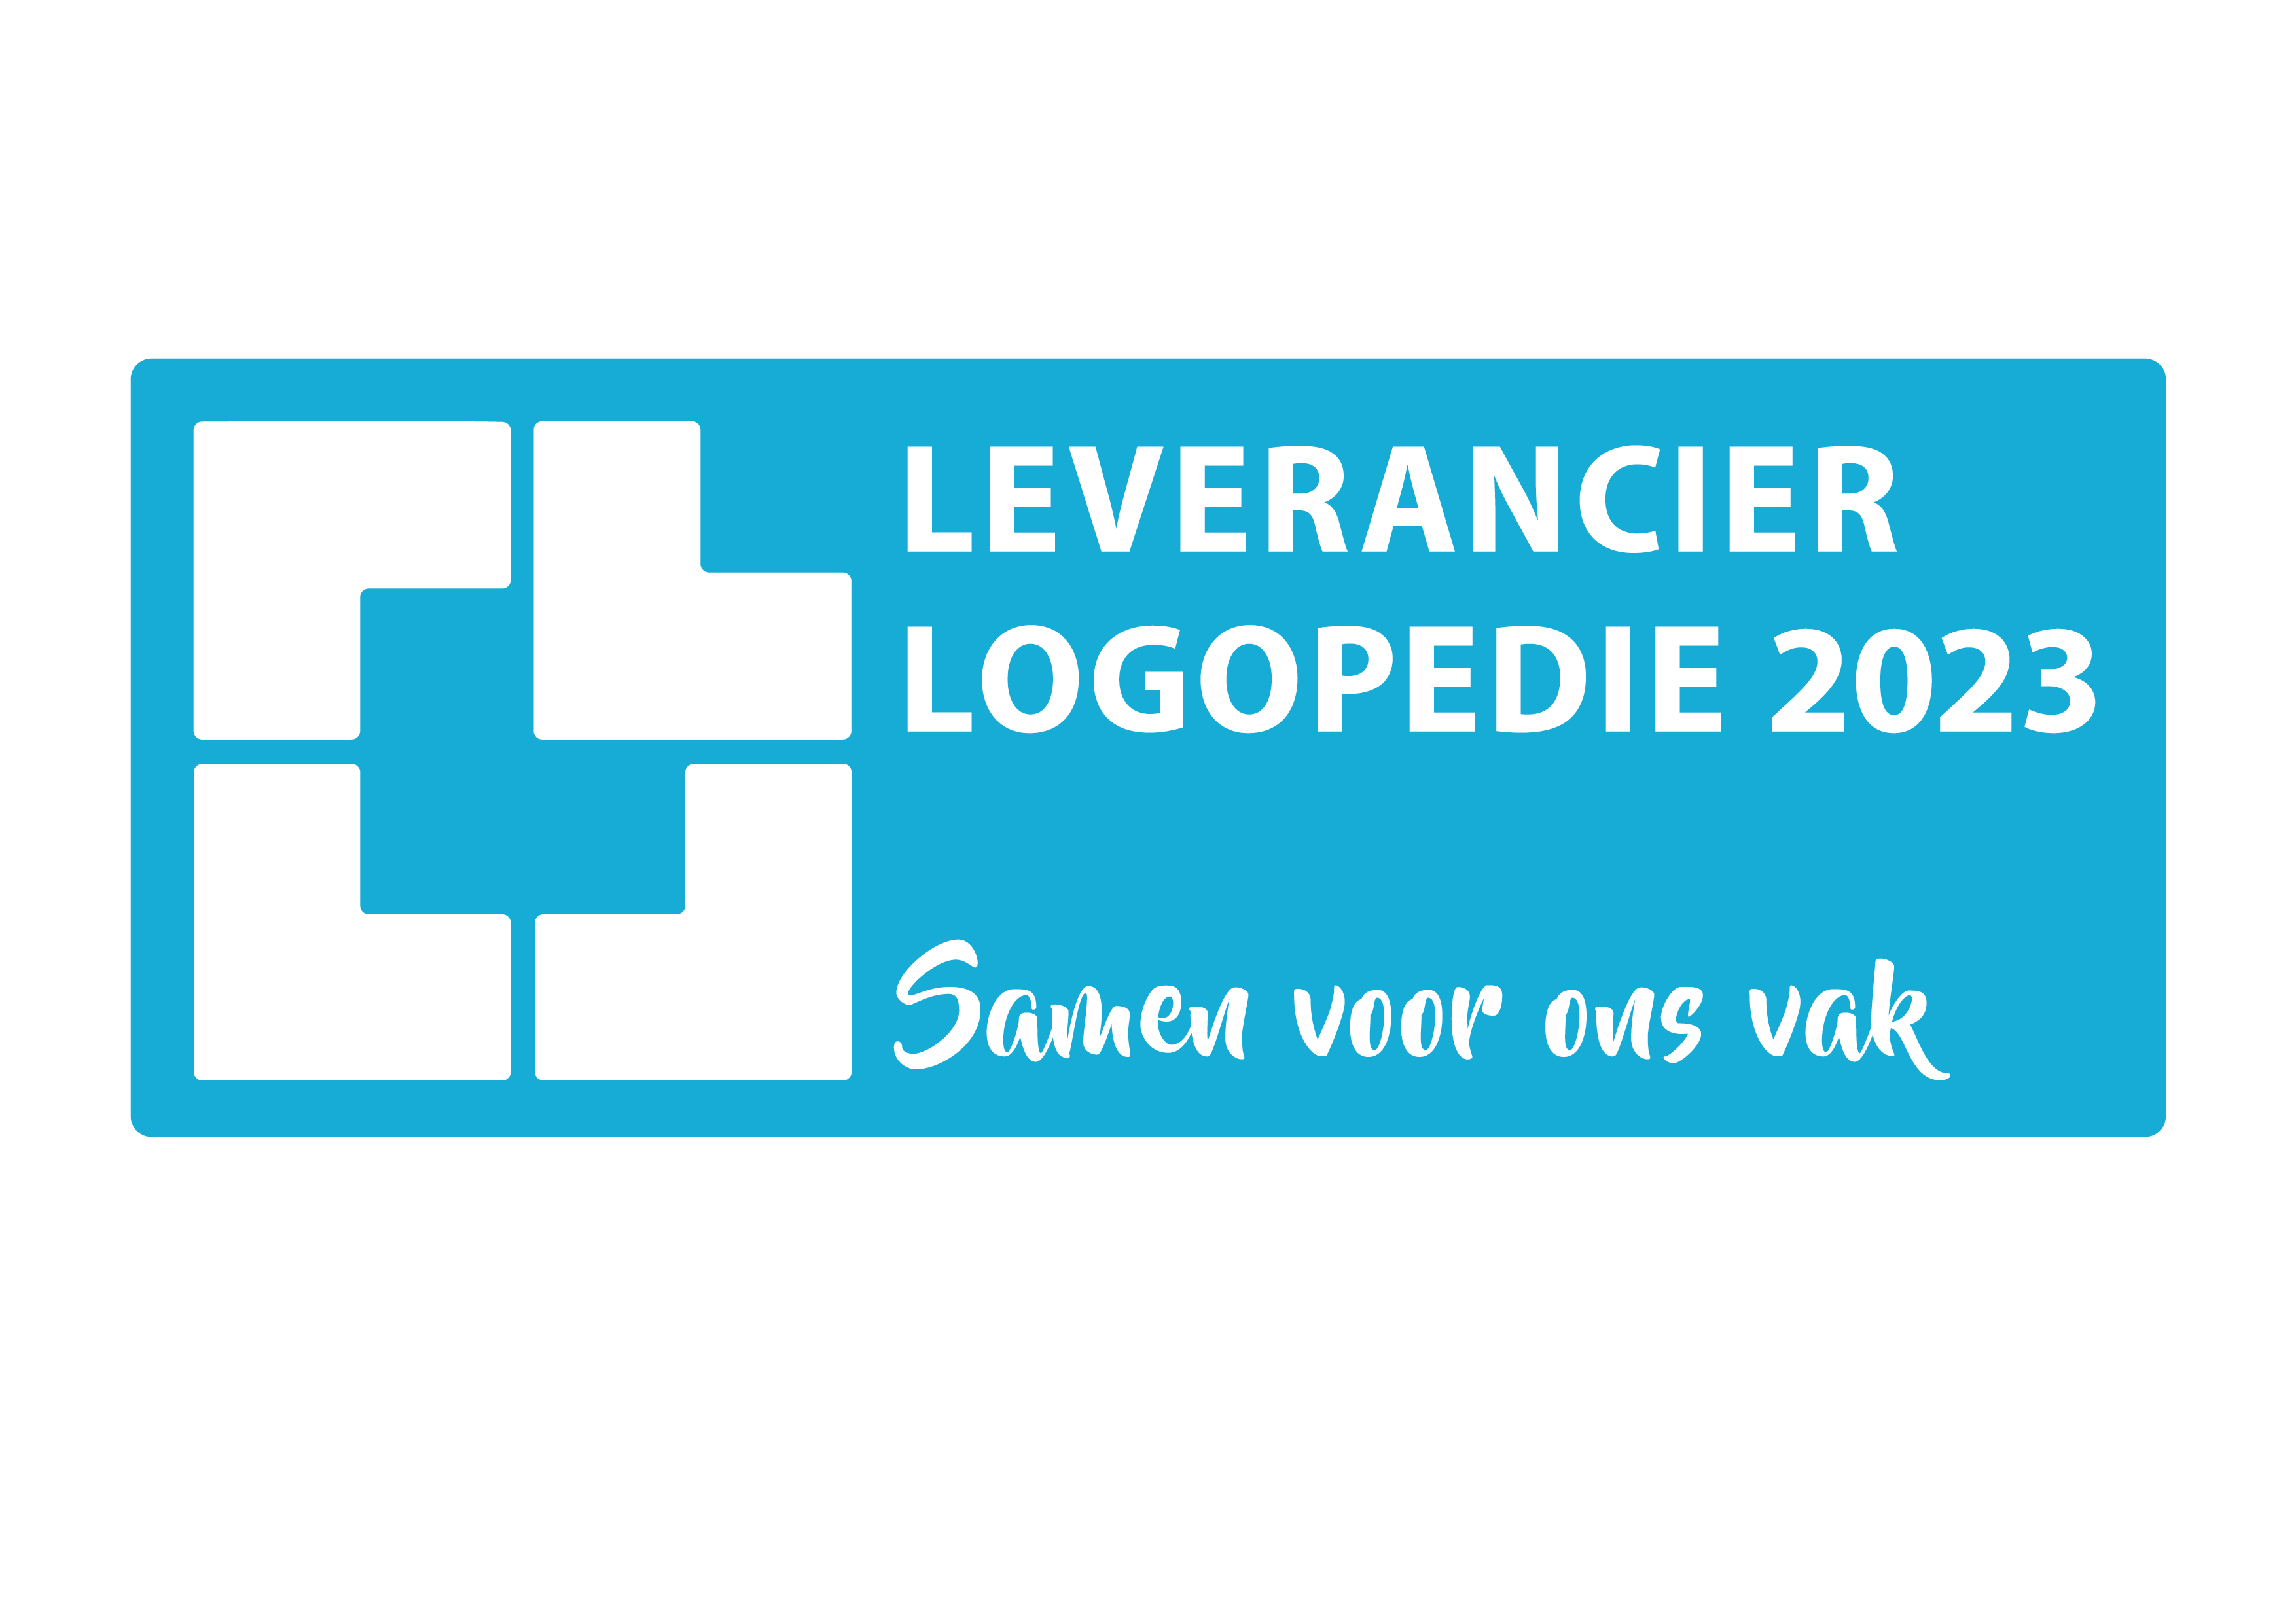 NVLF leverancier logo 2023